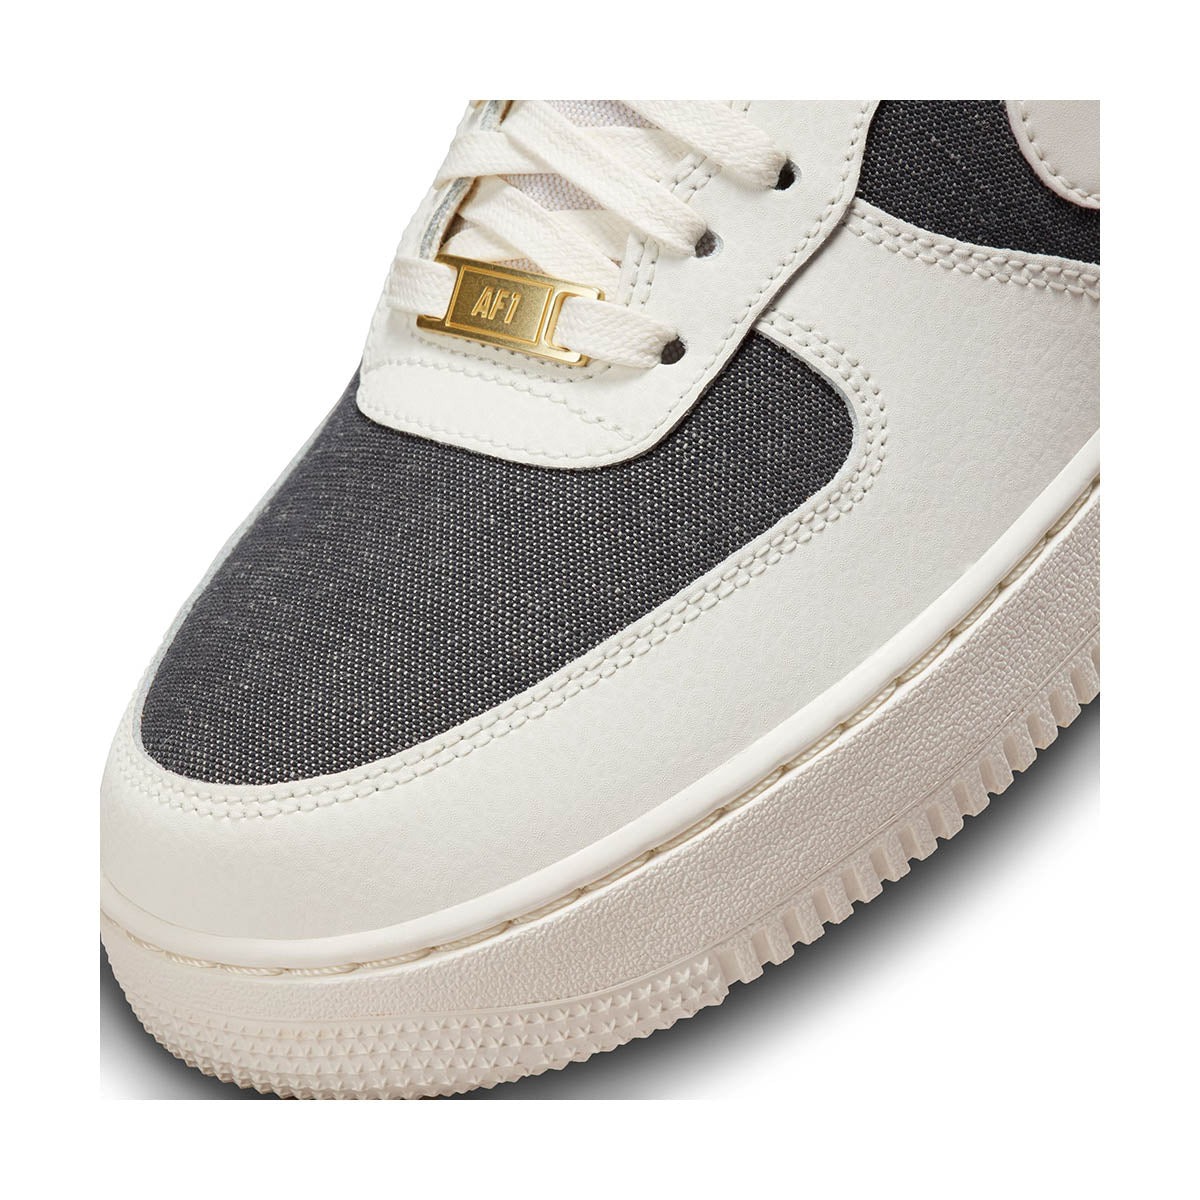 Nike Air Force 1 '07 LV8 Black/Summit White Men's Shoes, Size: 12